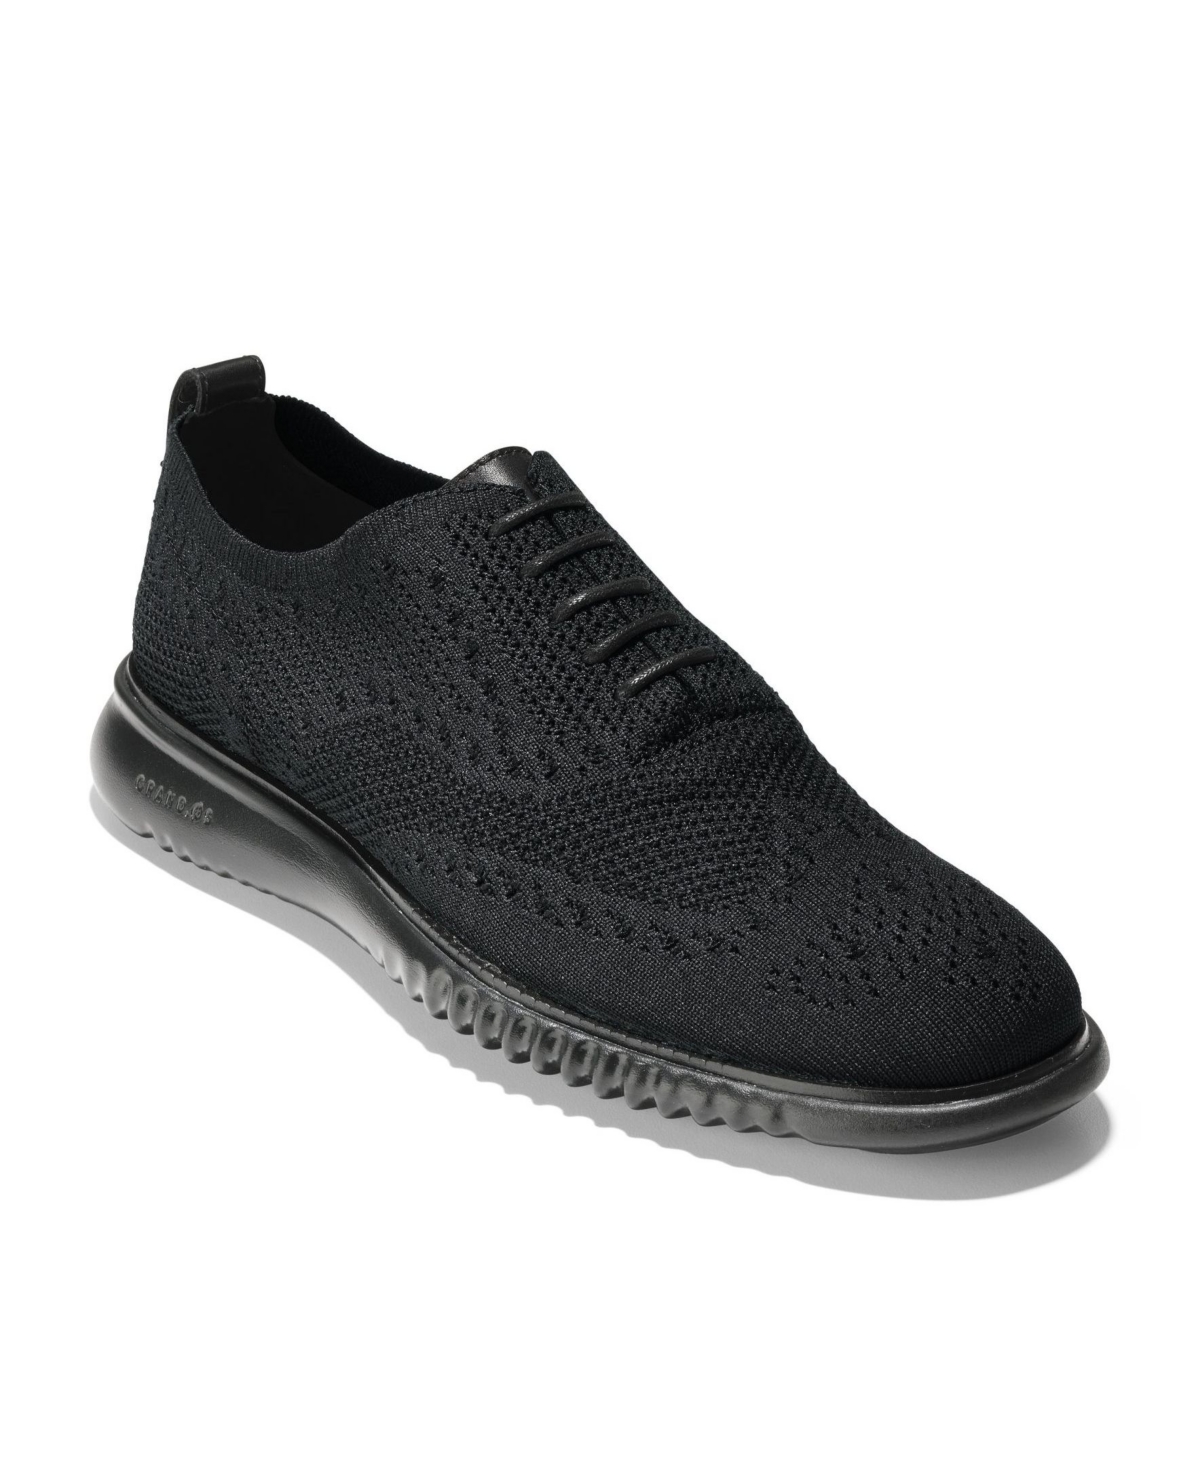 Cole Haan Men's 2.zerogrand Stitchlite Oxford Shoes In Black,black